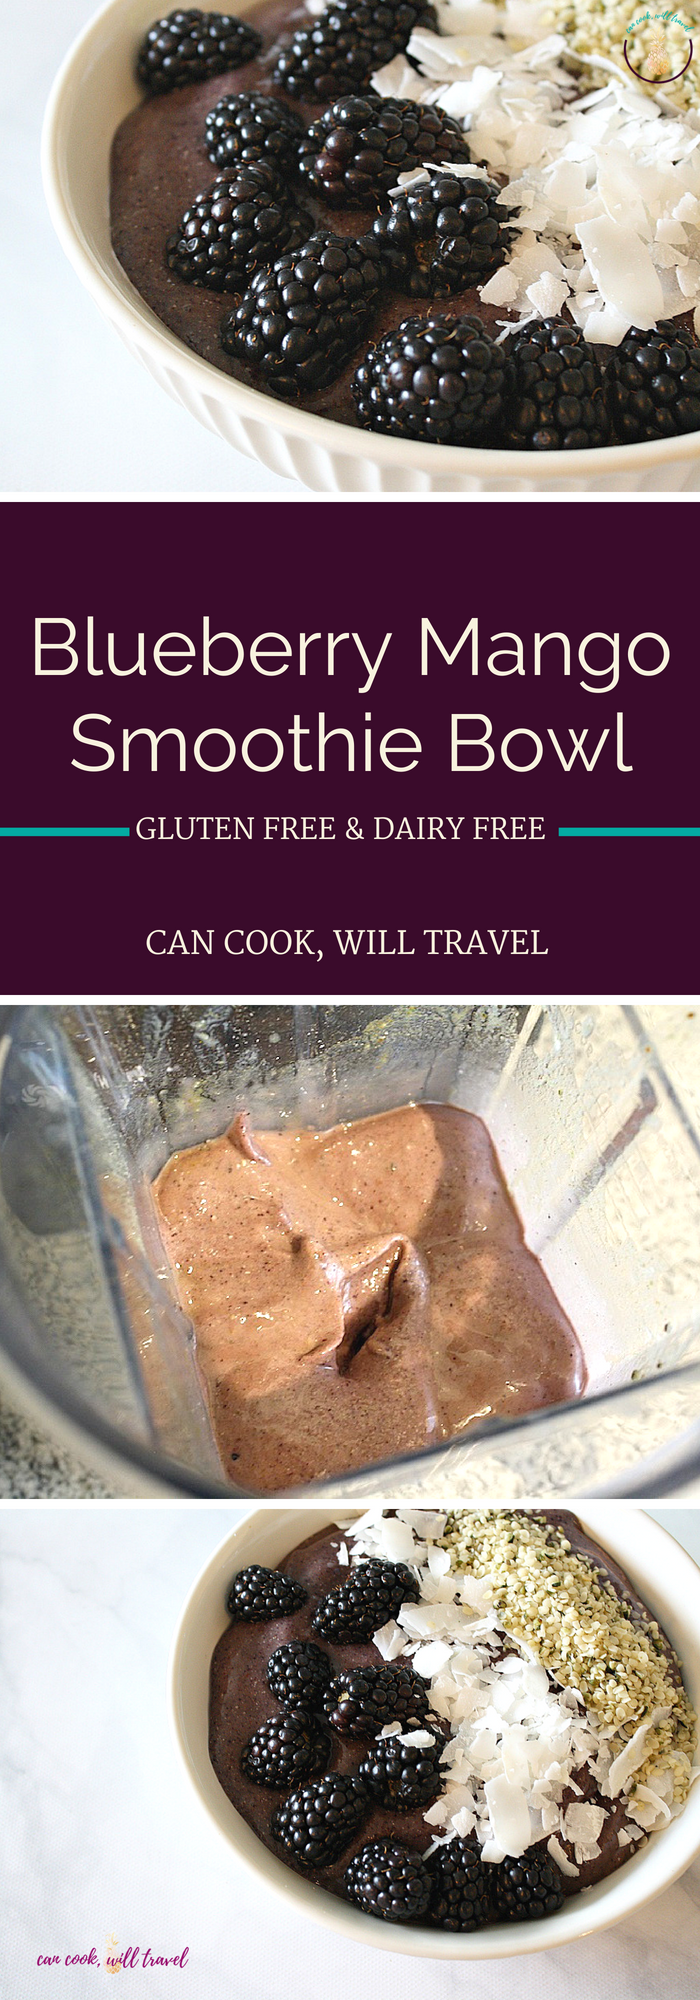 Blueberry Mango Smoothie Bowl_Collage2